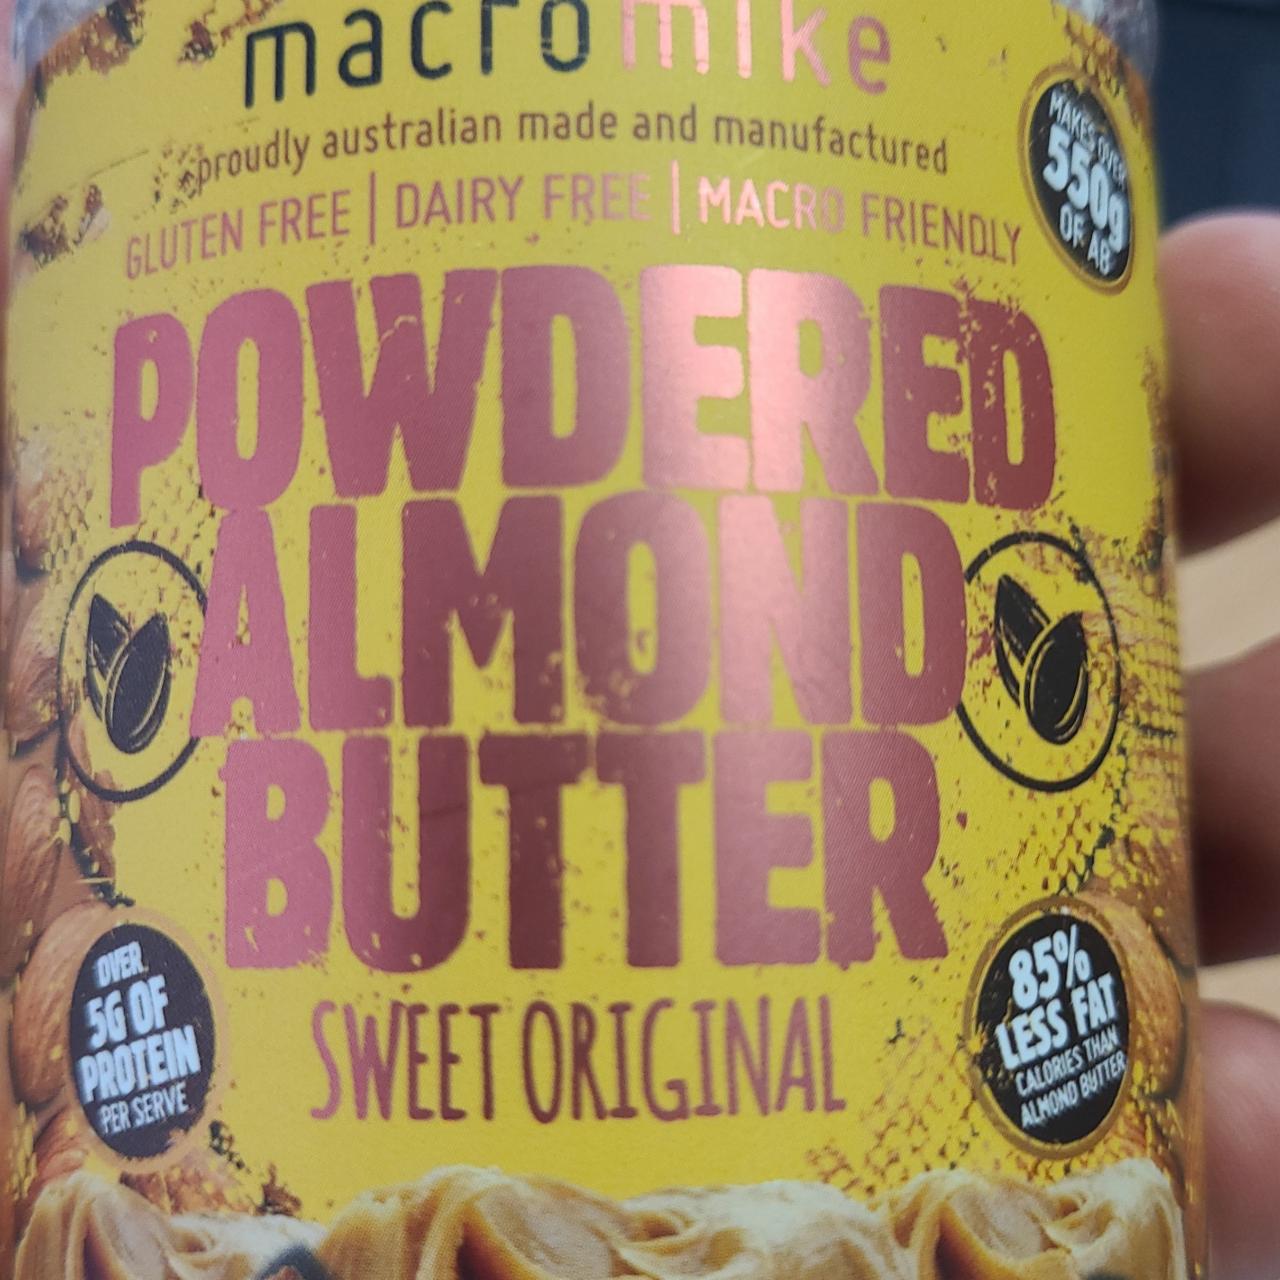 Fotografie - Powdered Almond Butter Sweet Original Macro Mike